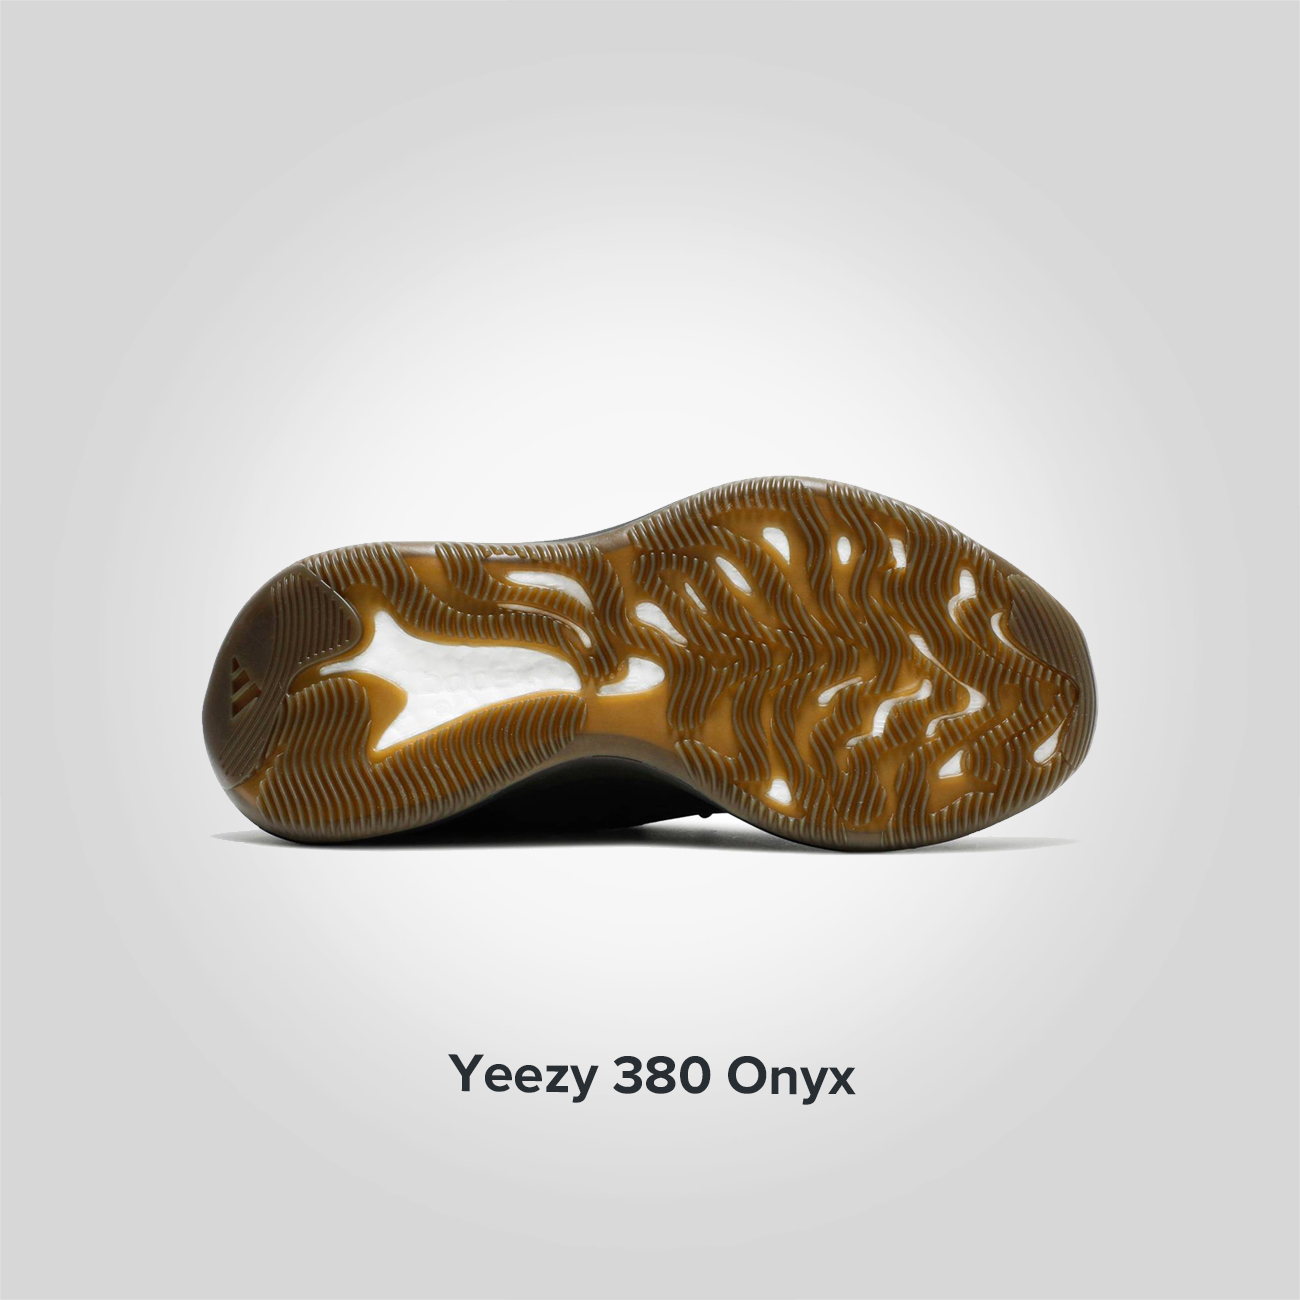 Yeezy 380 Onyx